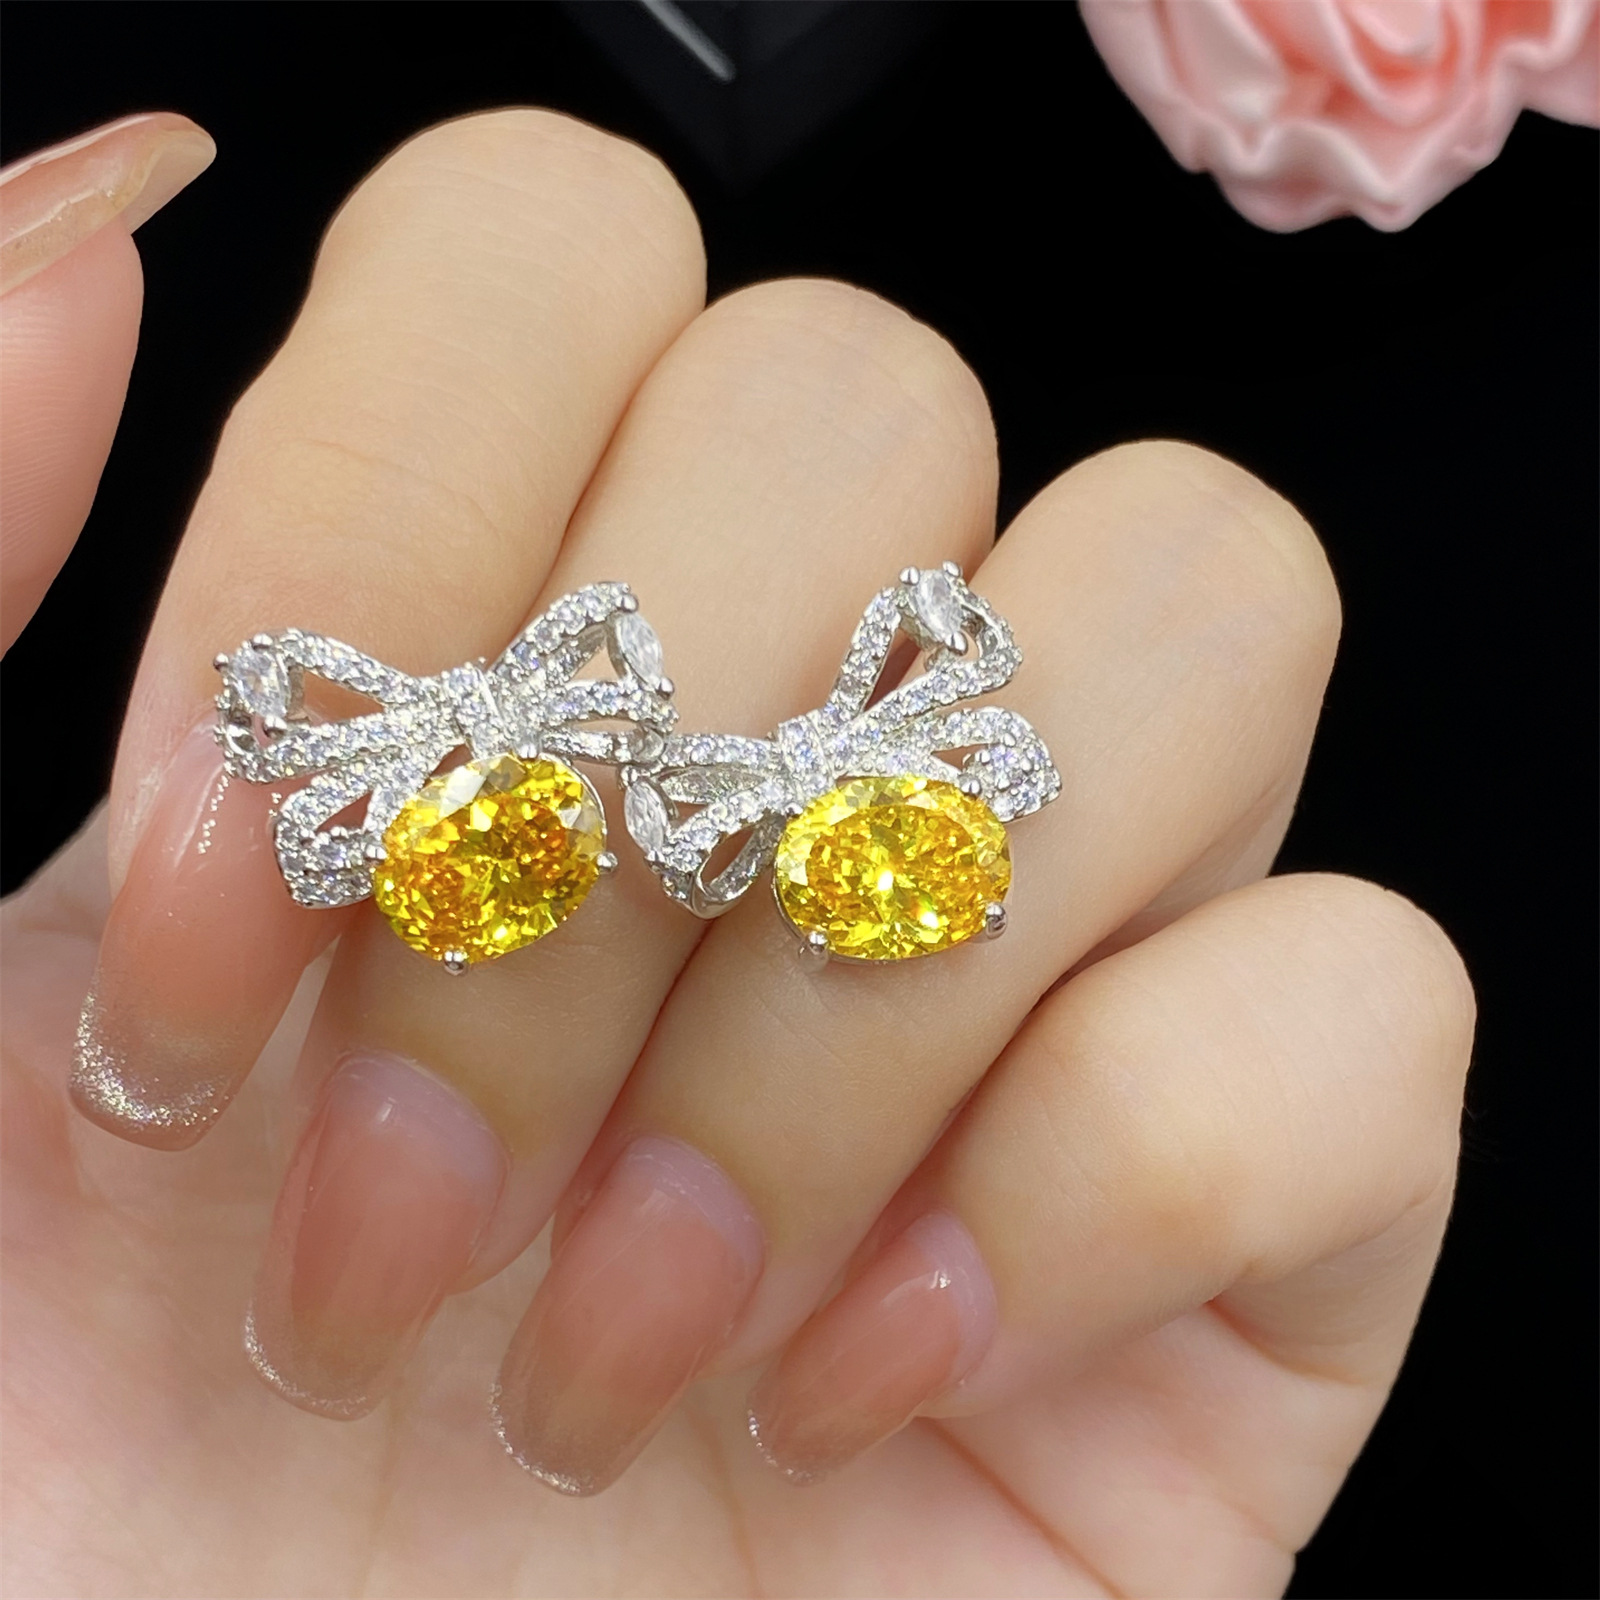 Mulheres jóias bowknot cristal zircon diamante branco banhado a ouro brincos studs namorada estudante presente de aniversário